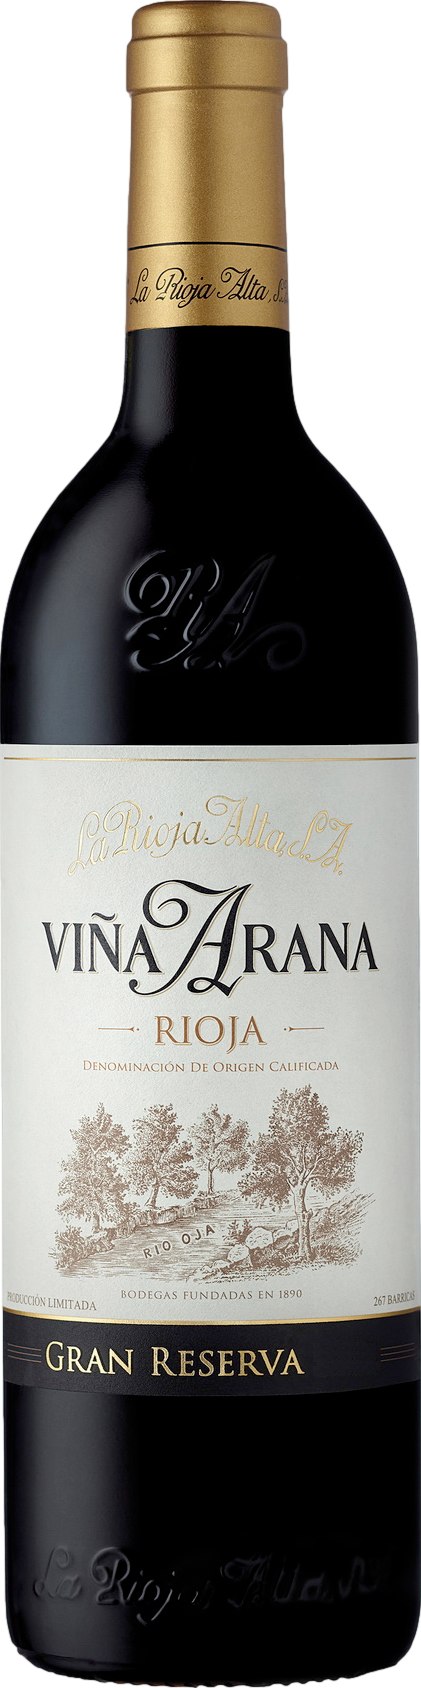 12/2016 günstig Kaufen-La Rioja Alta Gran Reserva Vina Arana 2016. La Rioja Alta Gran Reserva Vina Arana 2016 . 